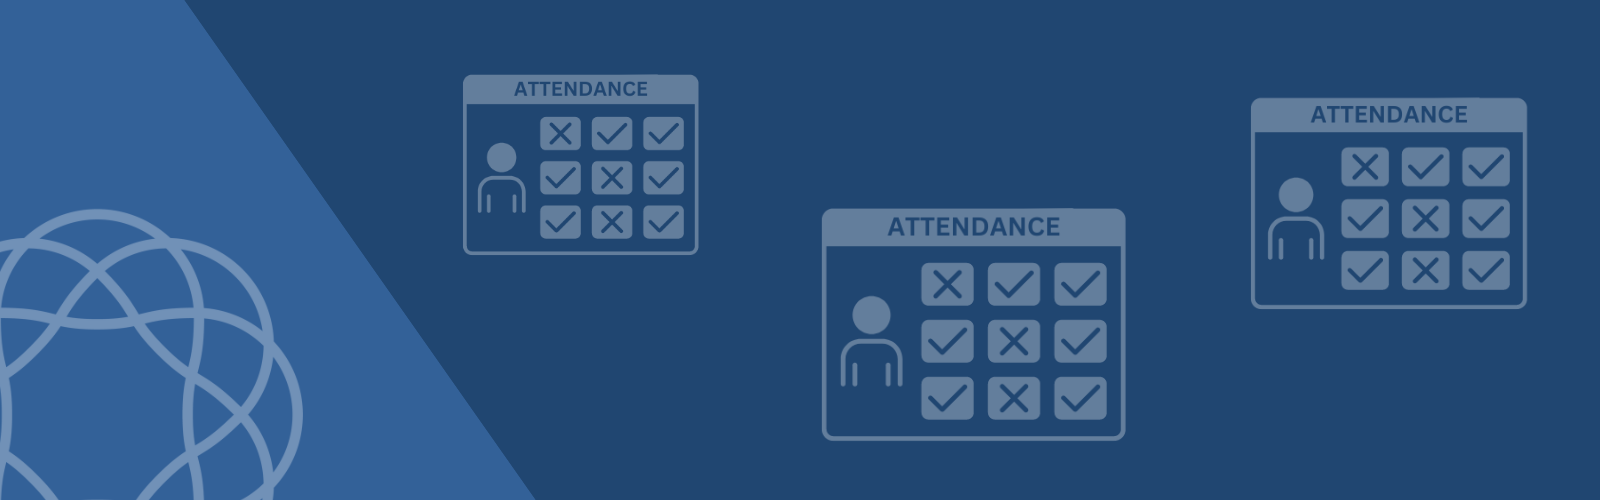 Small Group Management Software: Signups, Attendance + Metrics